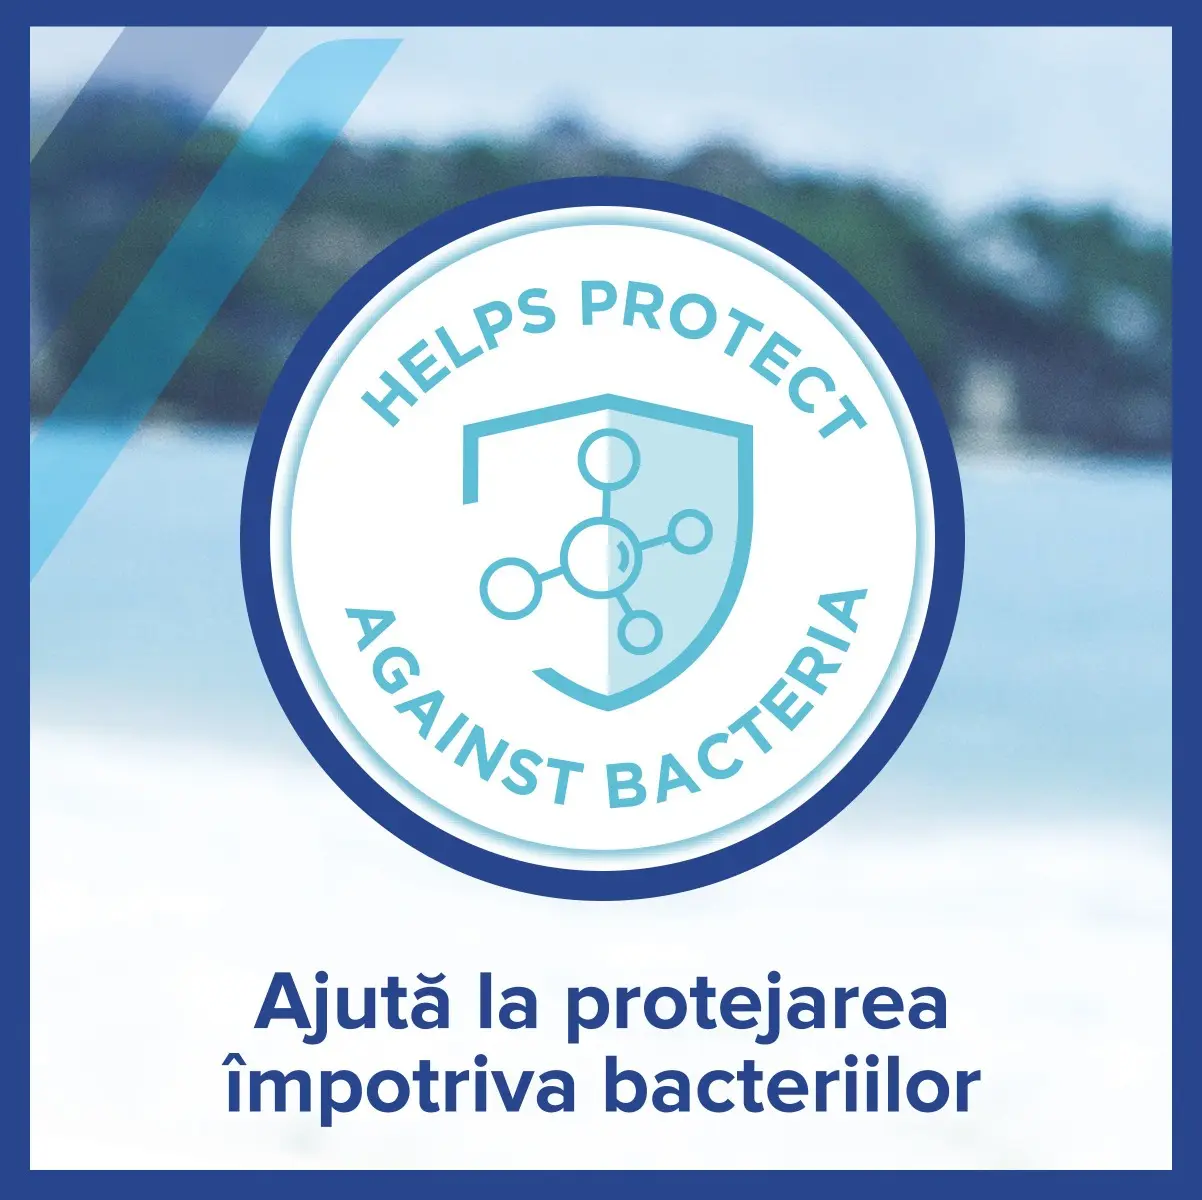 Sapun lichid Protex Cream, cu ingredient natural antibacterian, 300ml